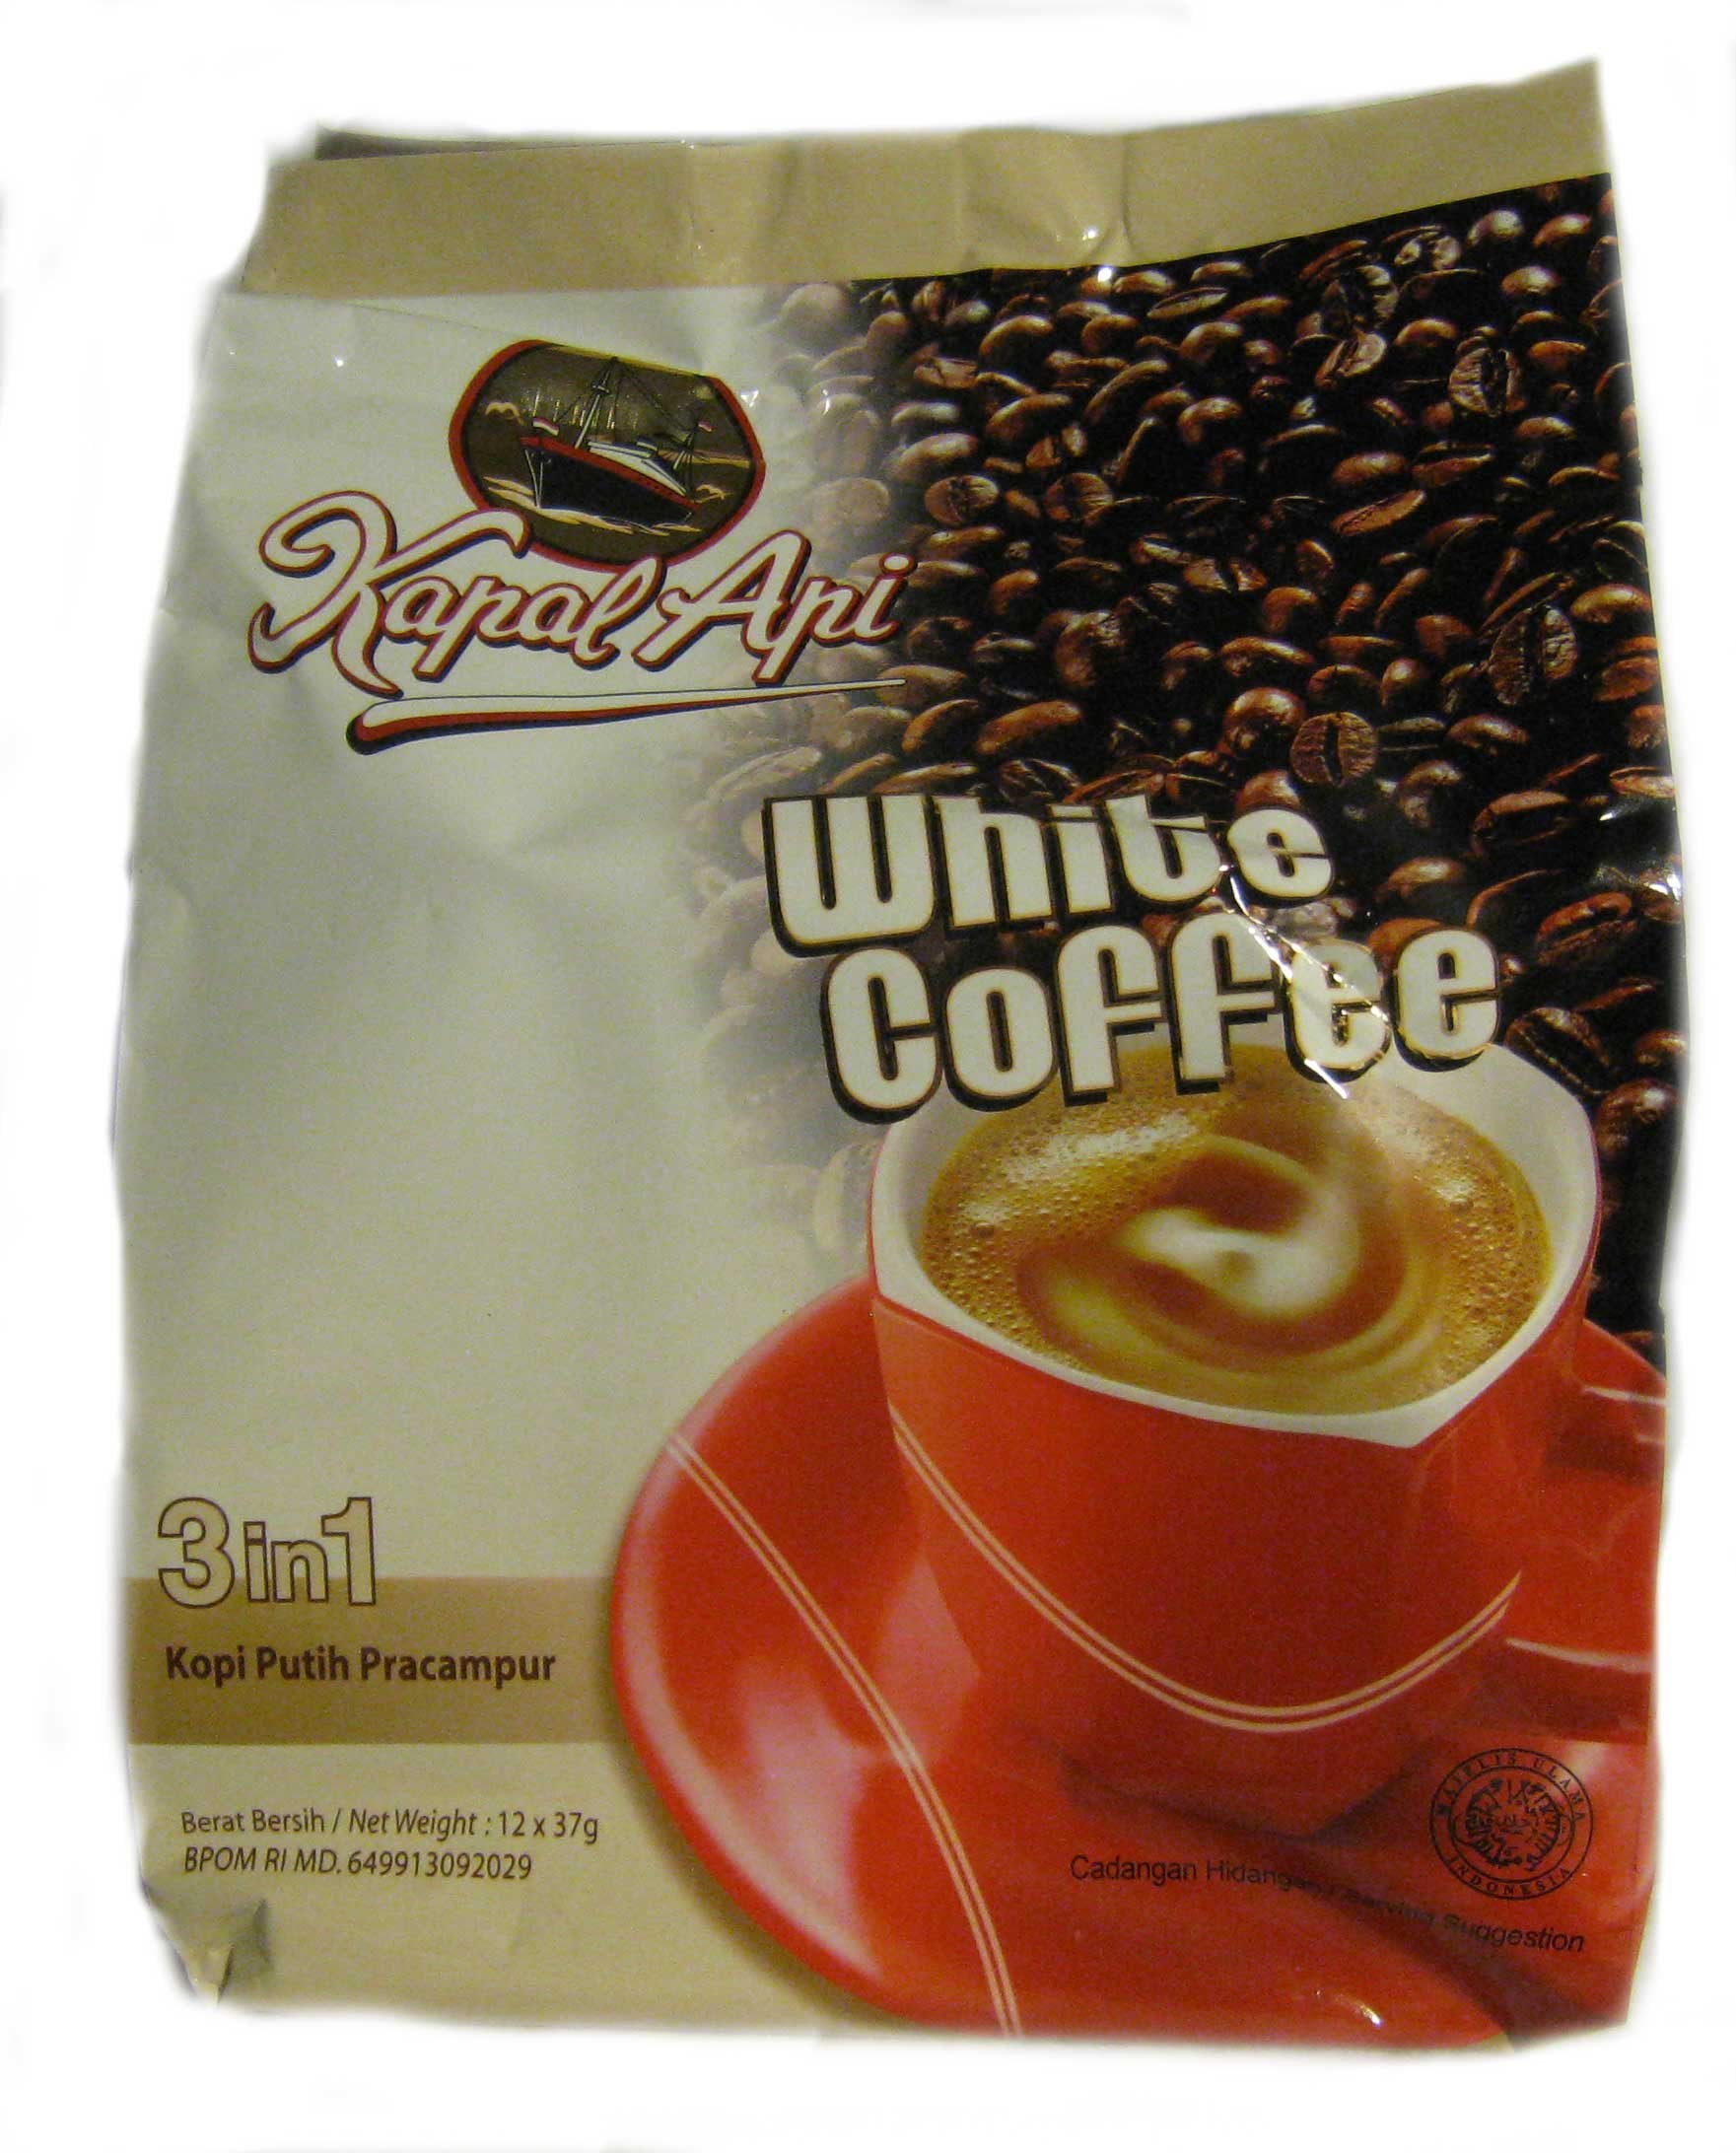 Kapal Api White Coffee 3 in 1 Premixed Instant Coffee, 12 x 37-gram pouches